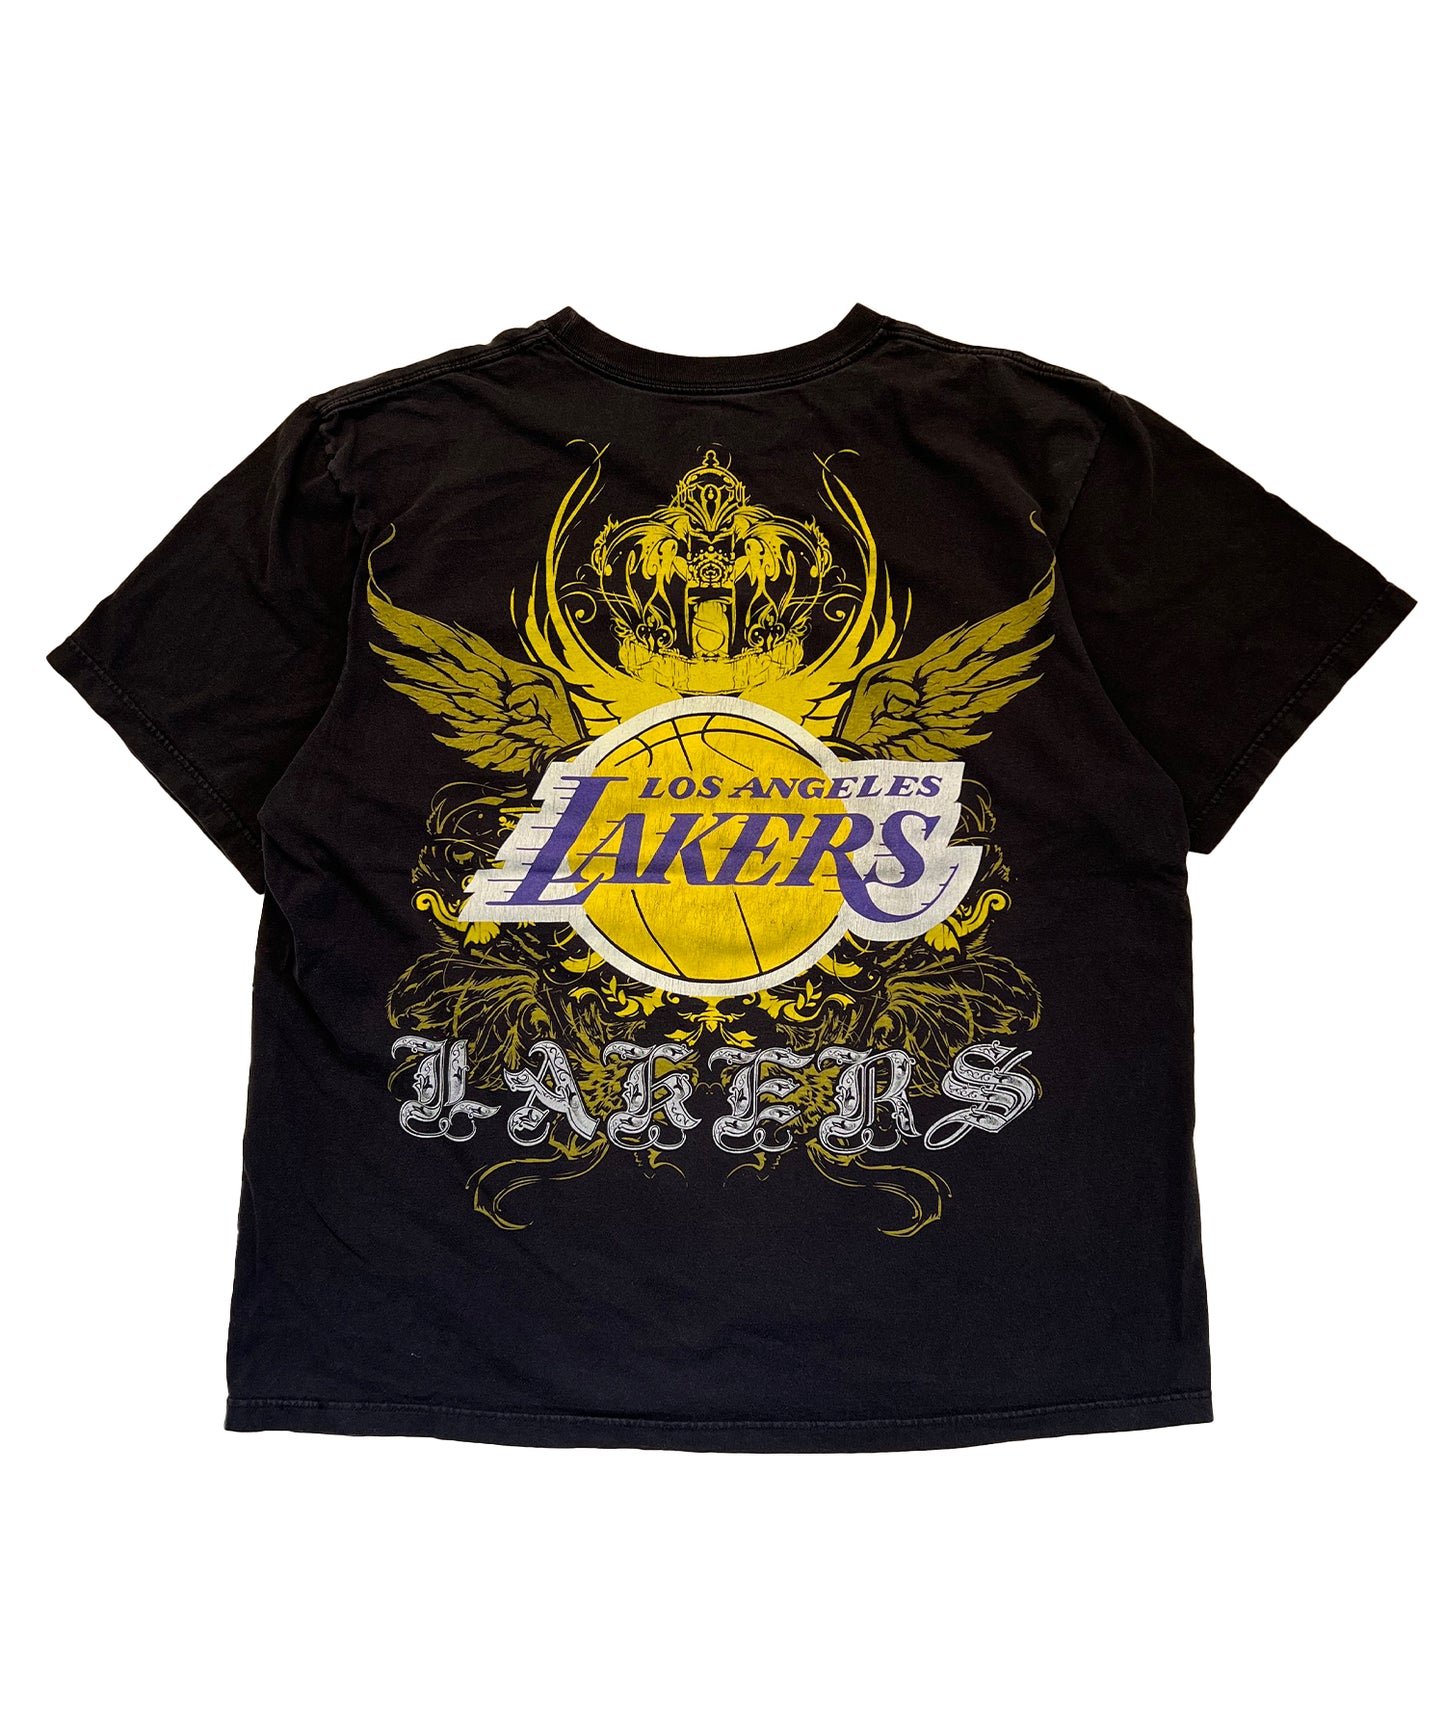 Adidas Lakers Tee (2X)